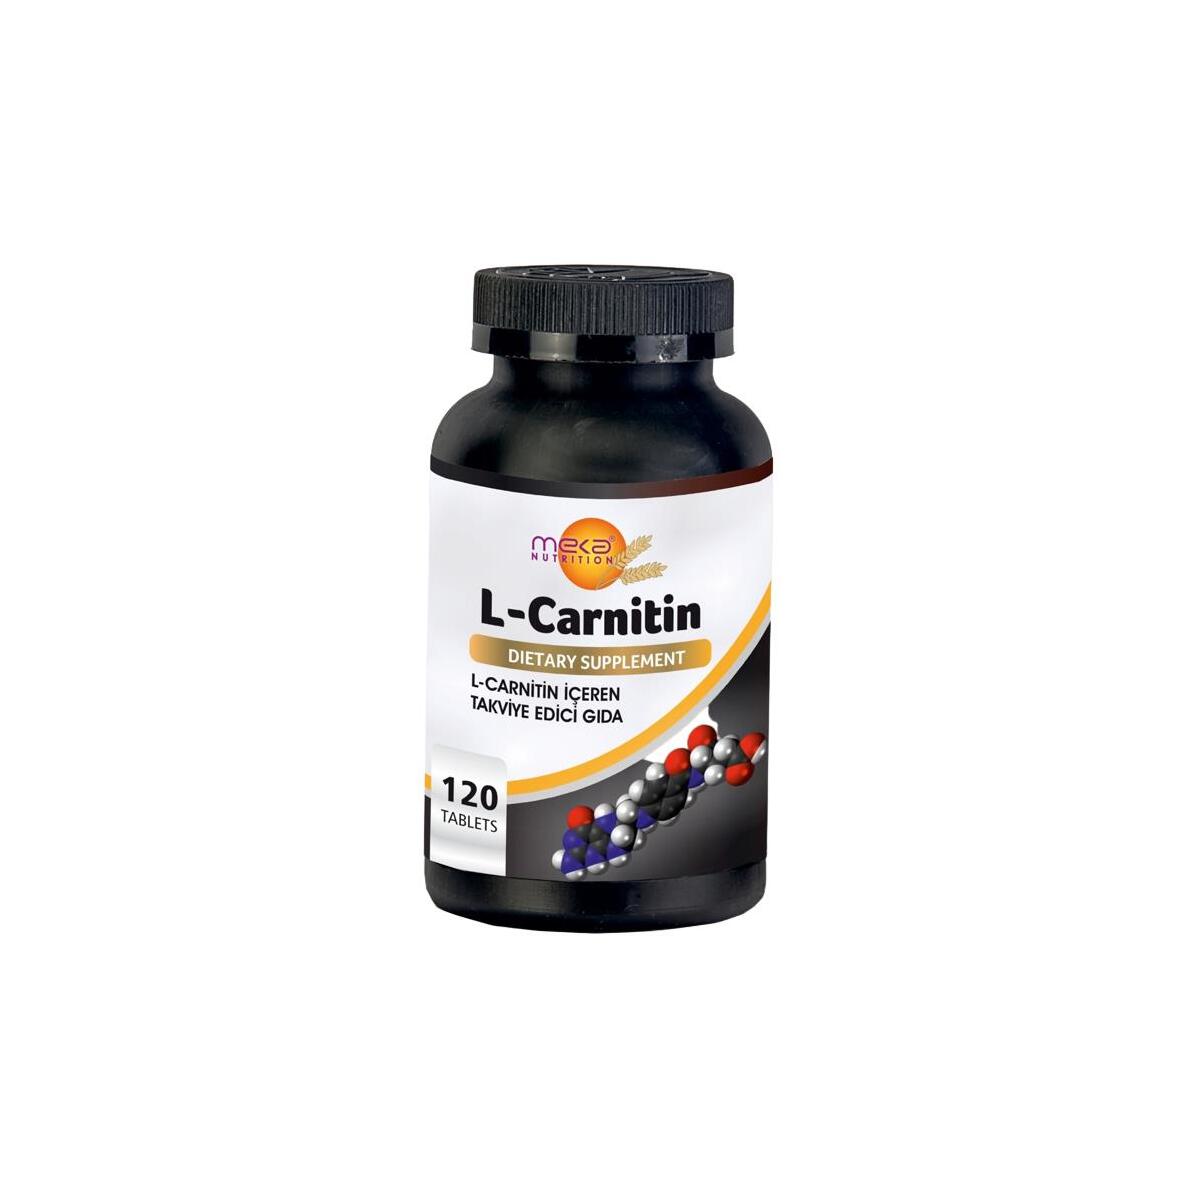 Meka Nutrition L-Carnitine 1000 Mg 120 Tablet